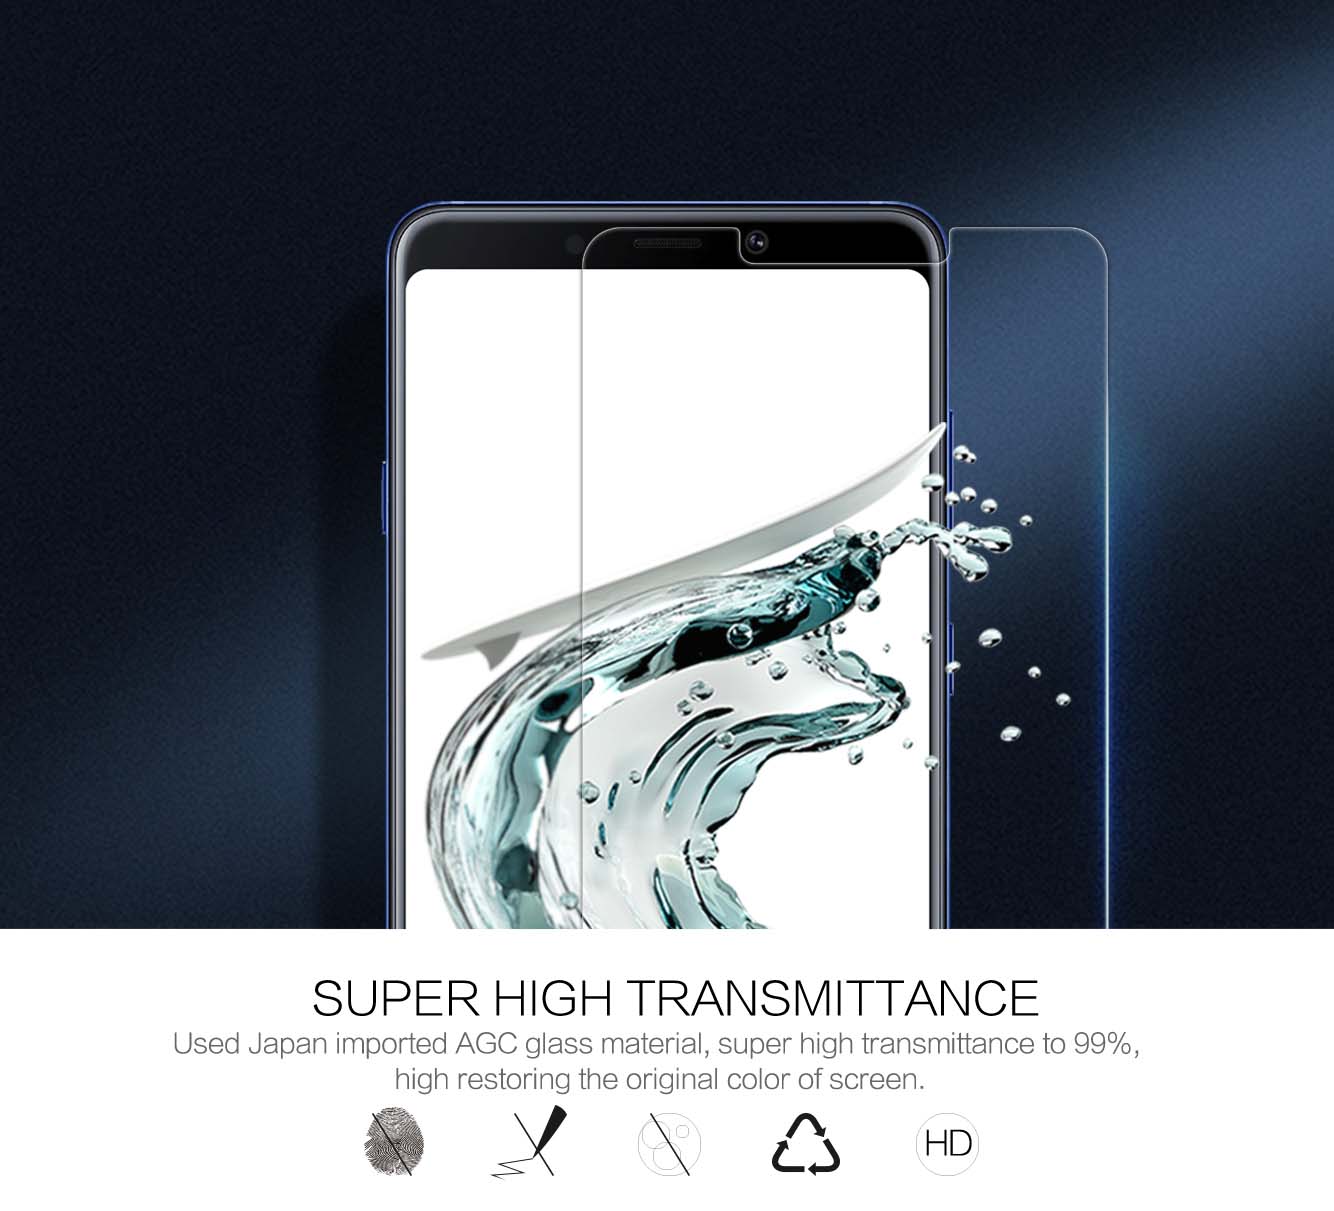 Samsung Galaxy A9s screen protector